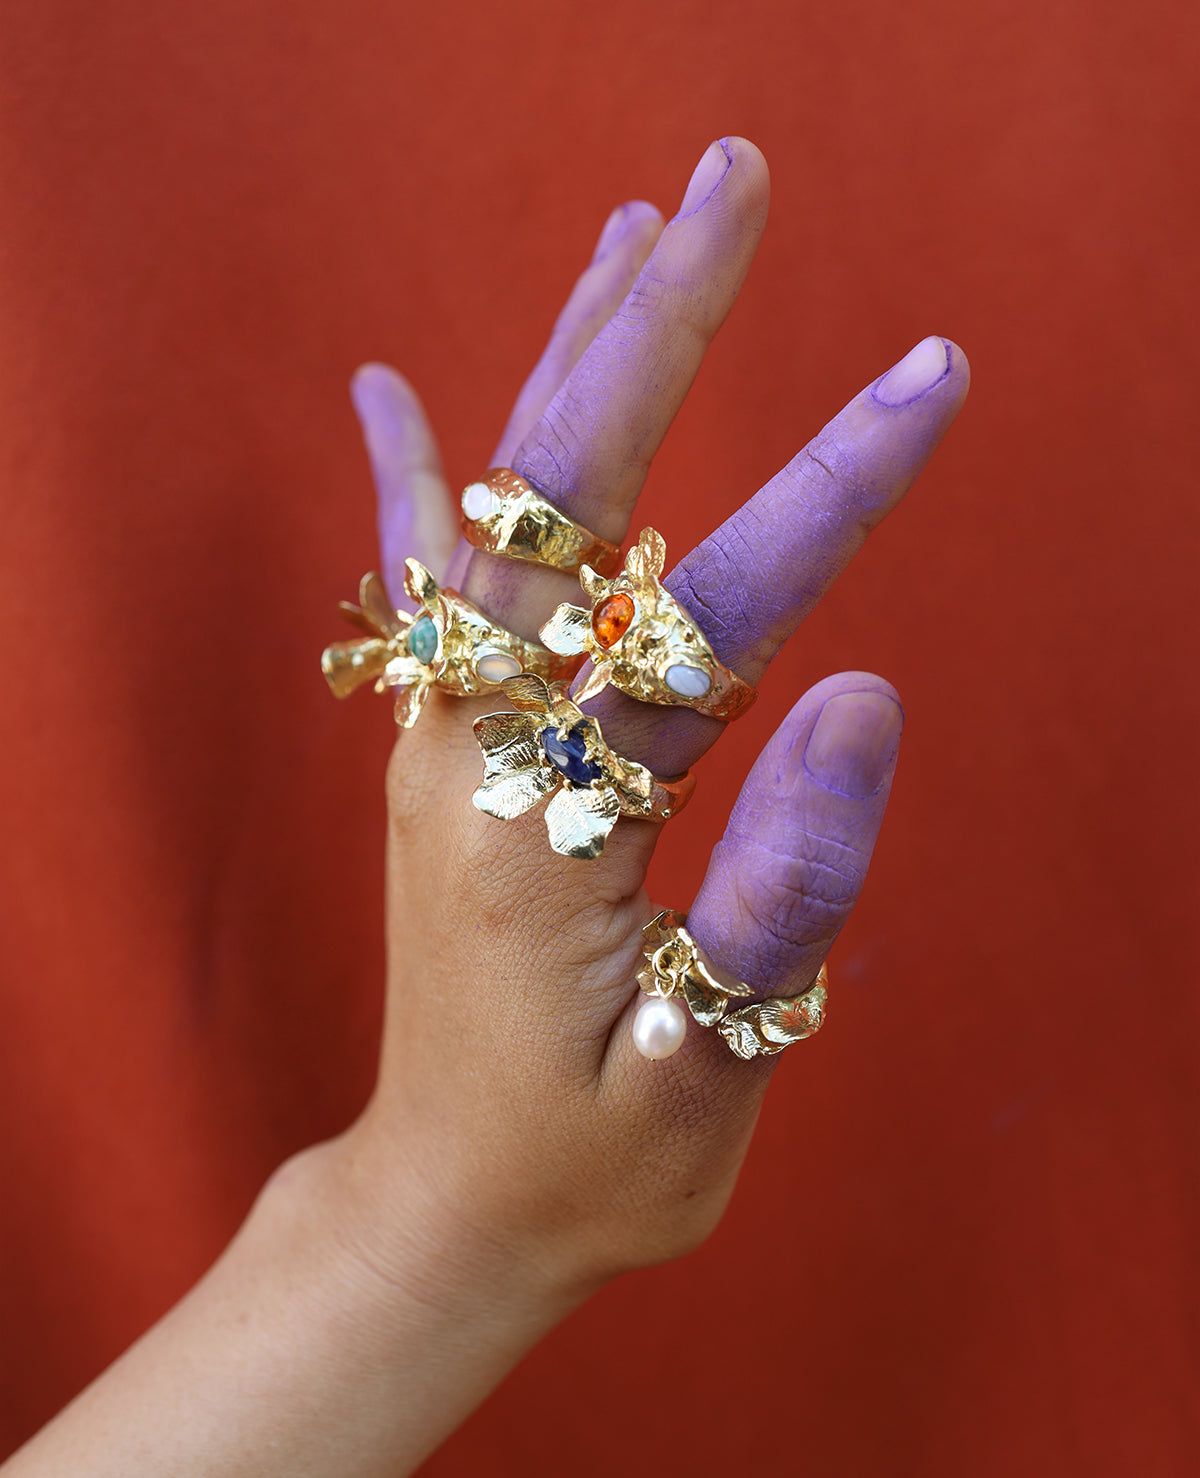 Amber Blossom // brass ring - ORA-C jewelry - handmade jewelry by Montreal based independent designer Caroline Pham